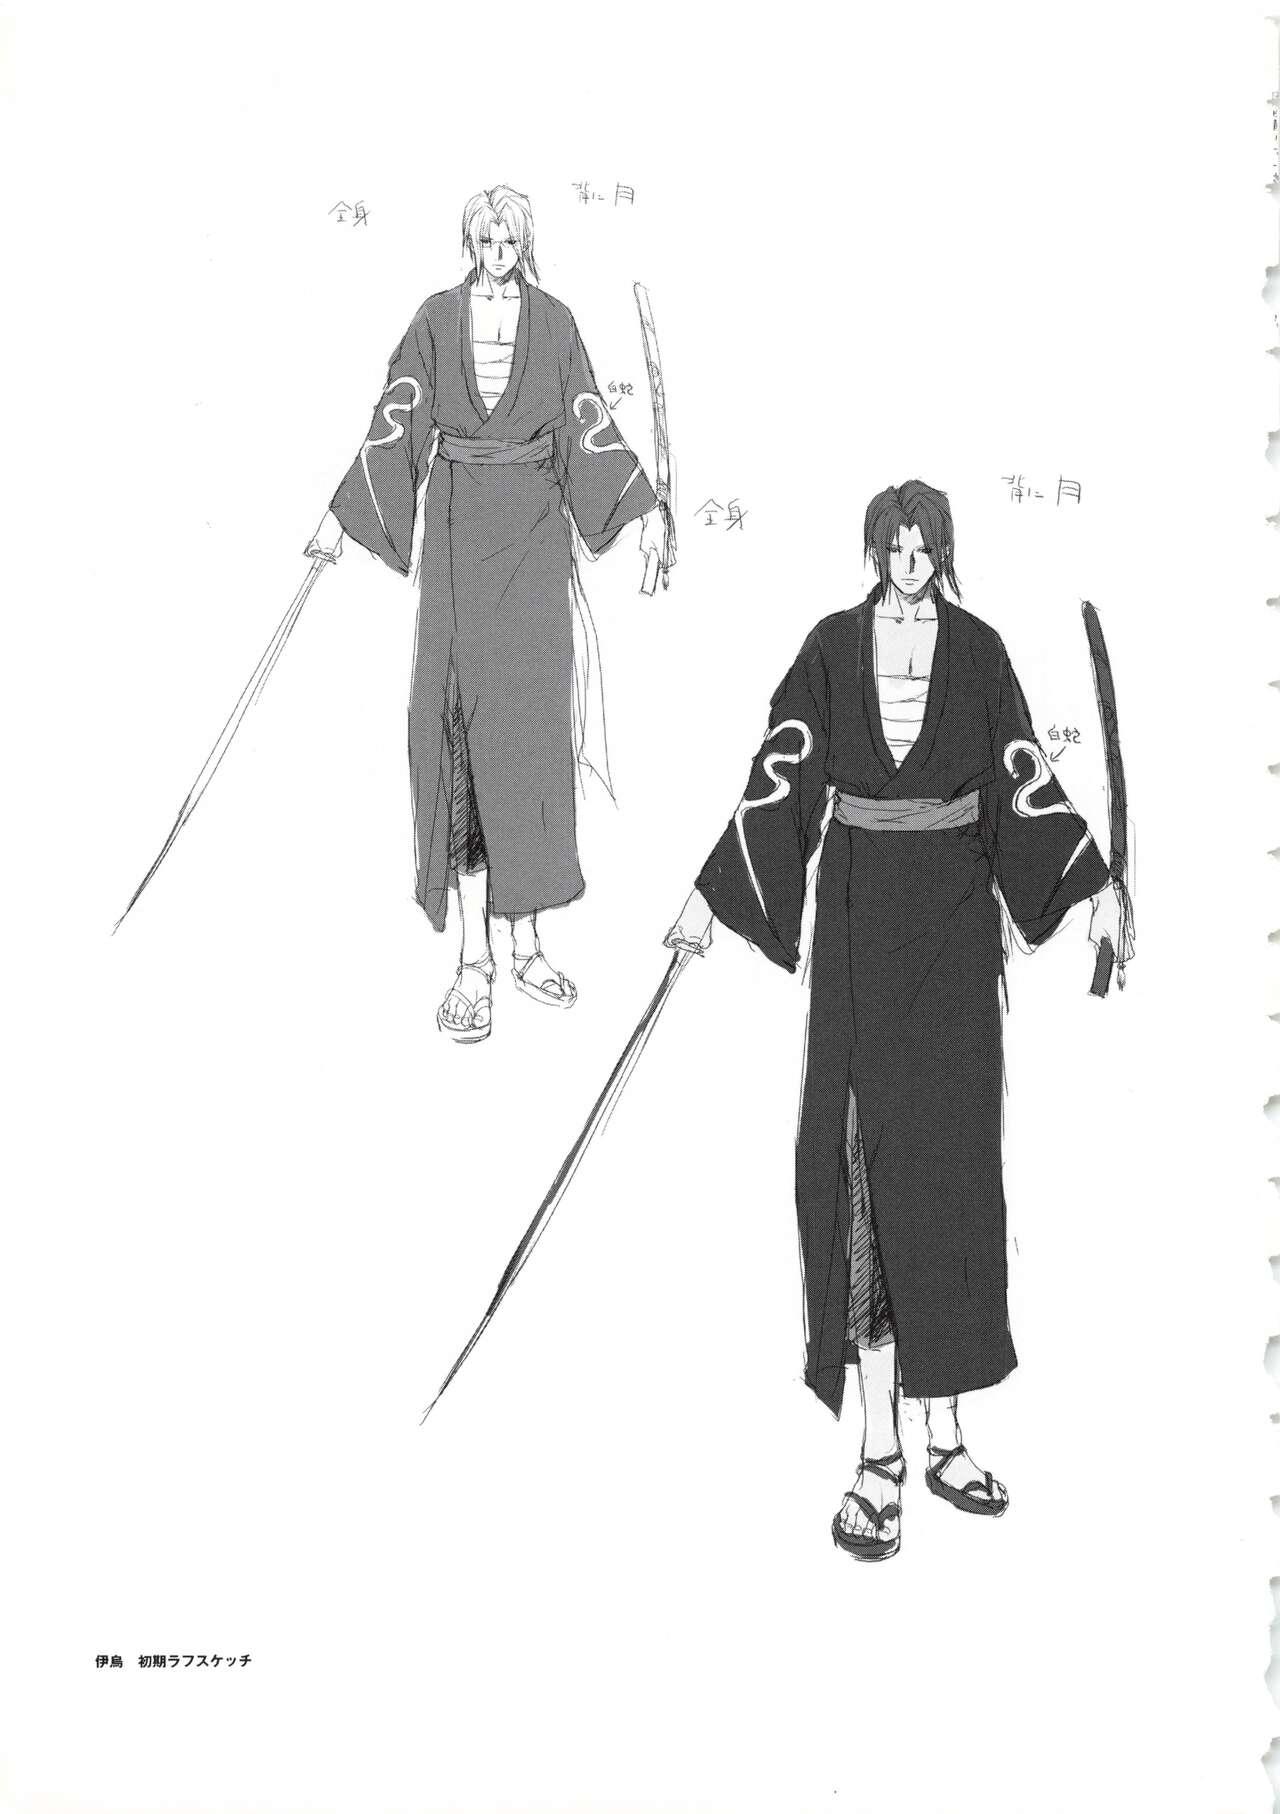 Hanachirasu - Initial Sketches and Unprocessed Illustrations - Selection 8